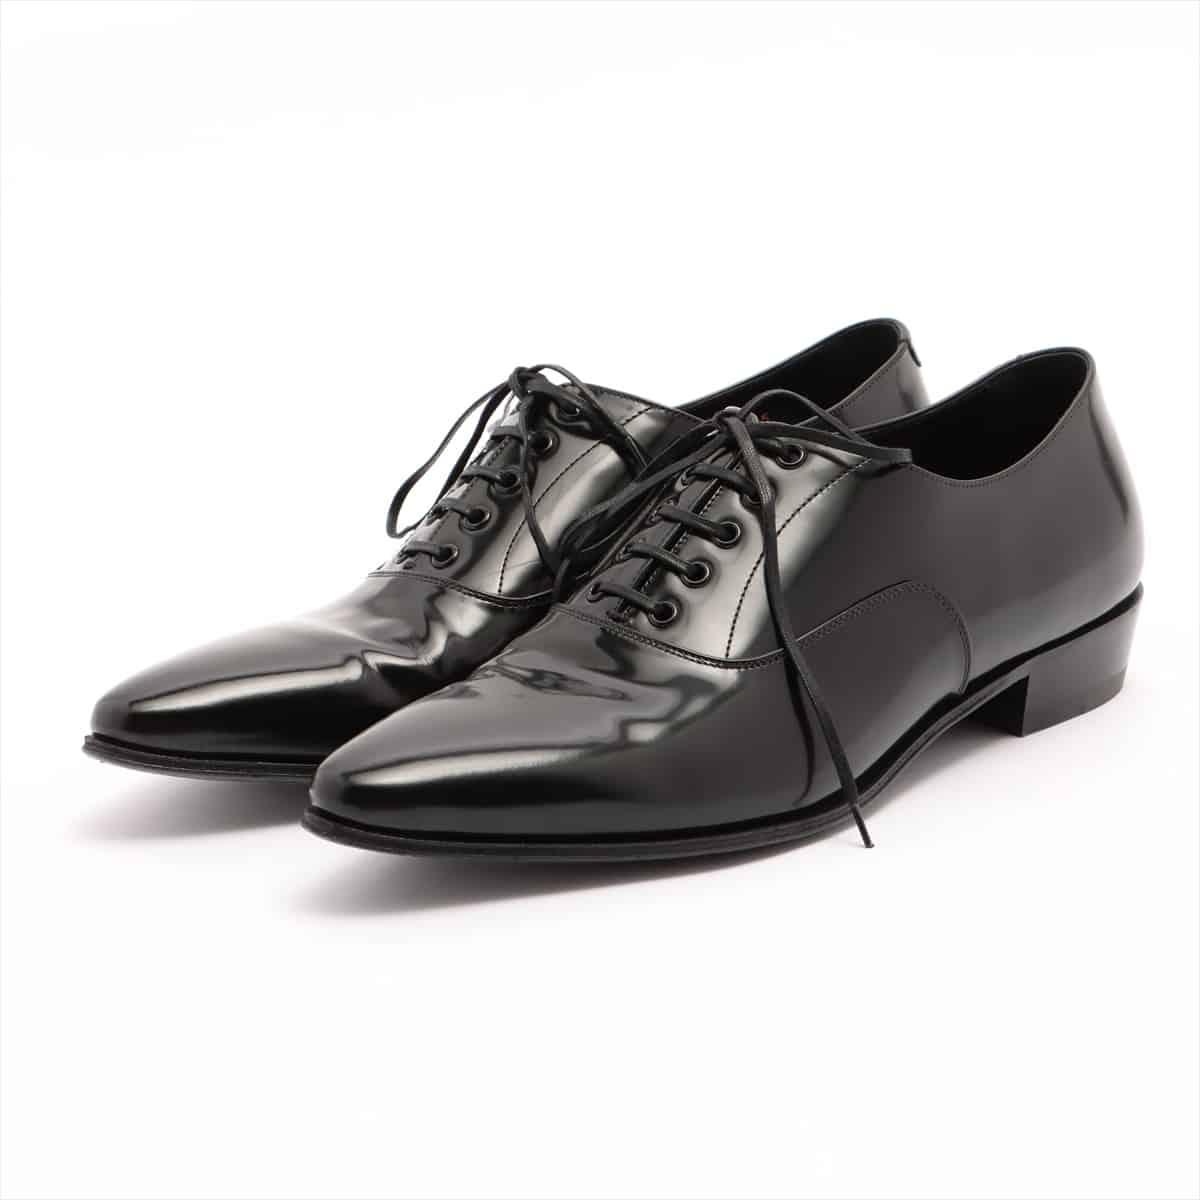 CELINE Leather Leather shoes 42 Men's Black 190013985 Inner feather plain toe